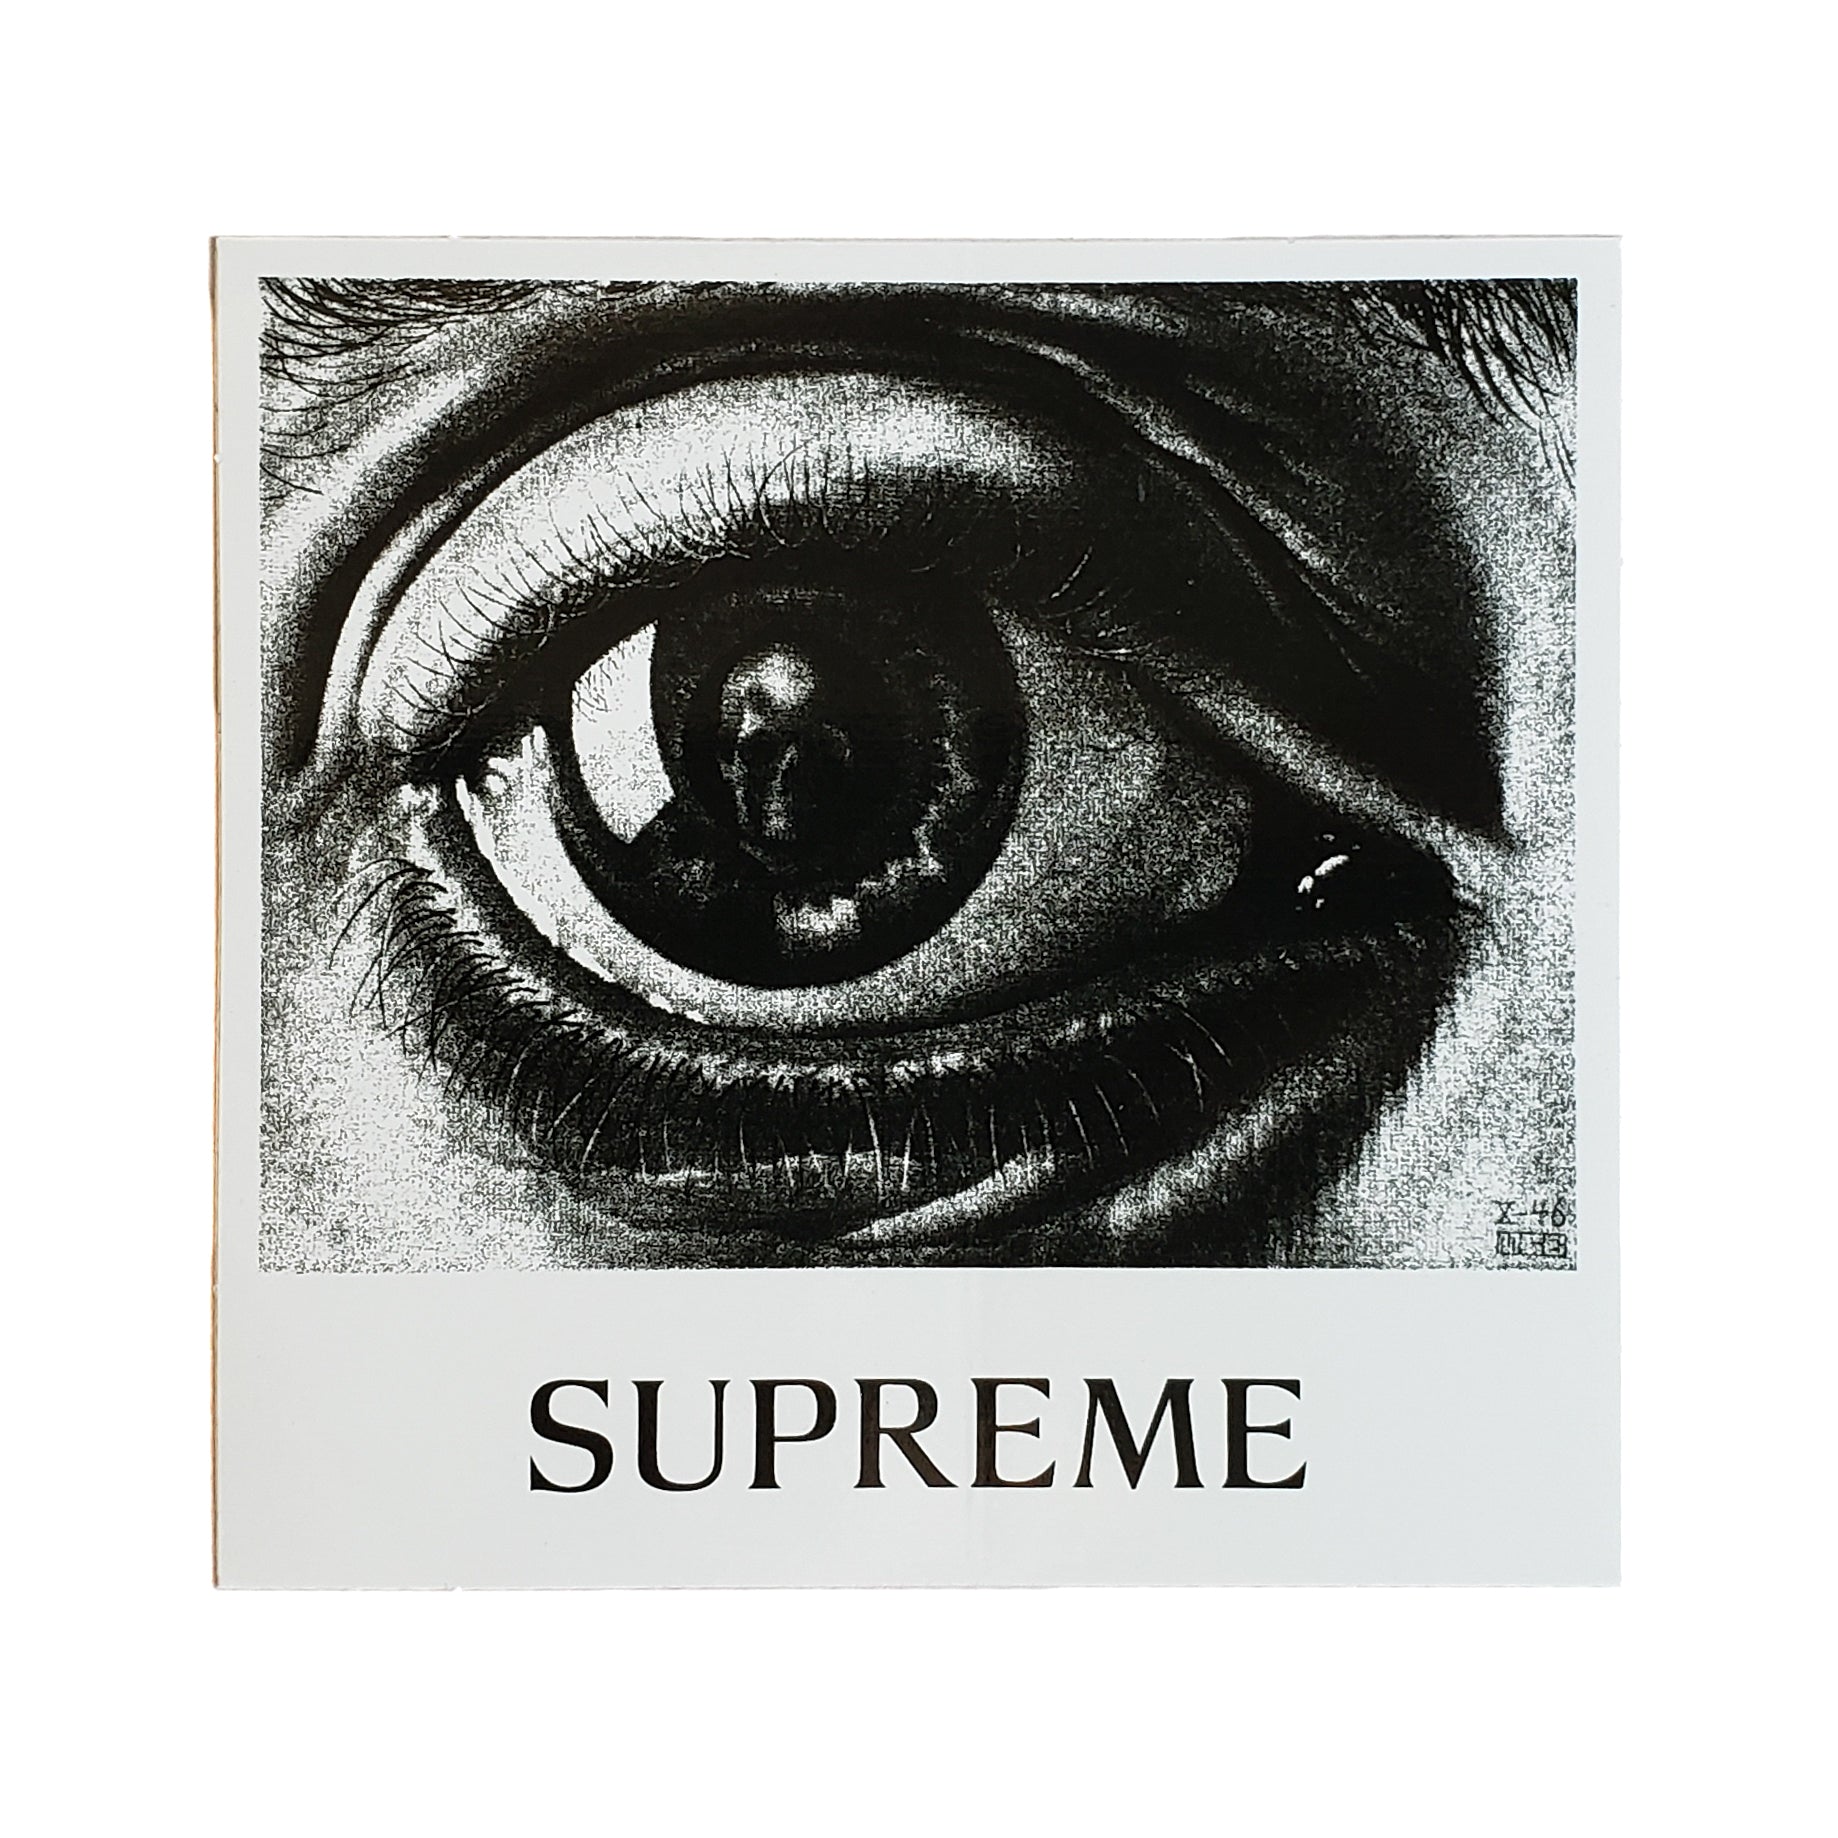 返金保証付 L Supreme M.C. Escher Eye Print L/S Tee | www